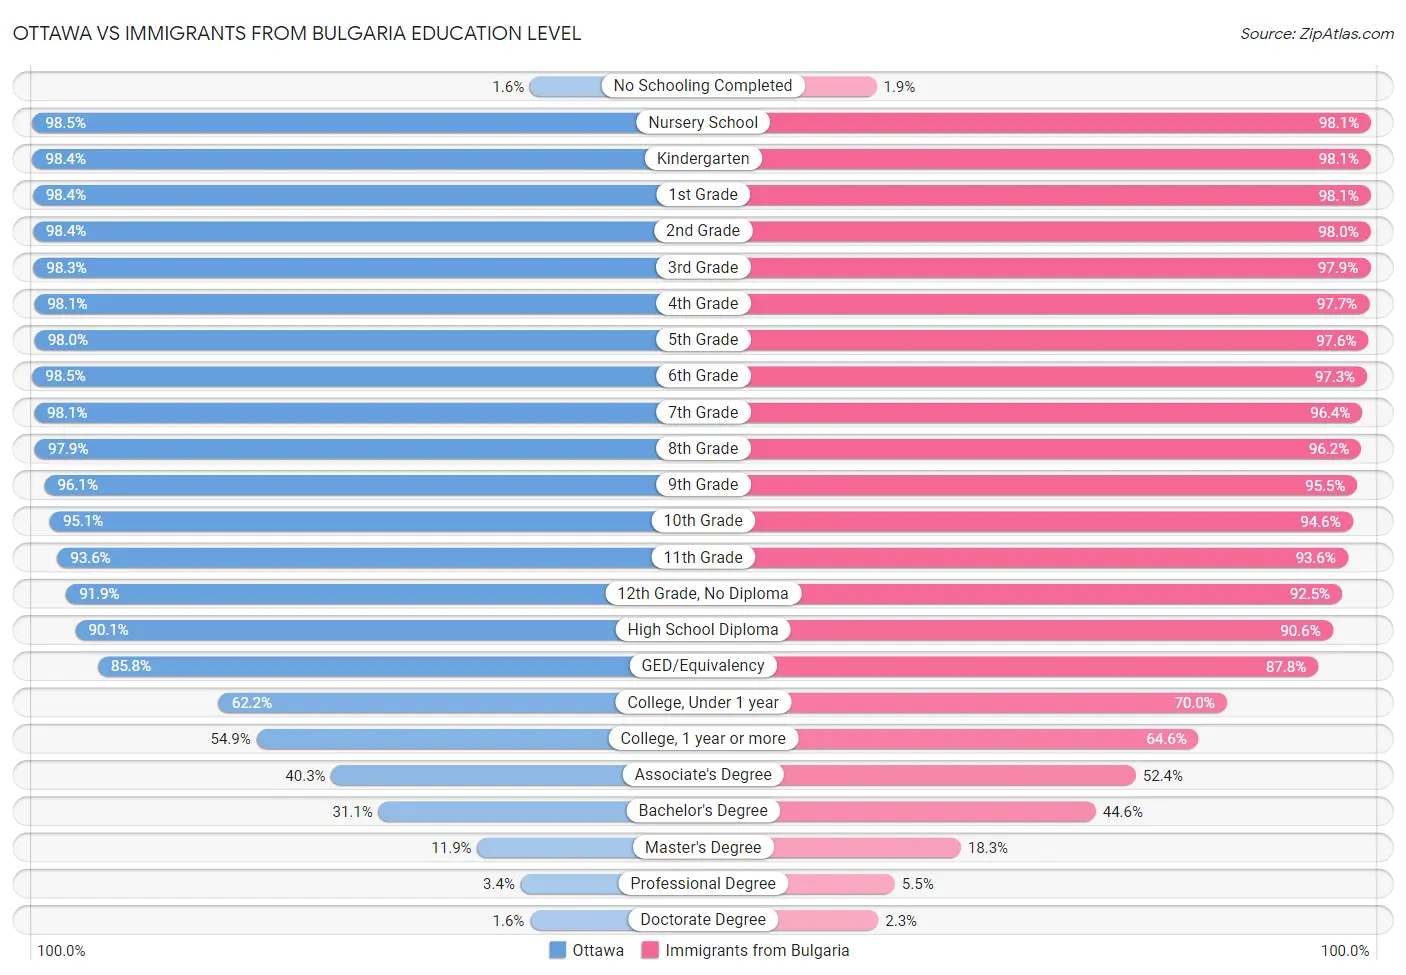 Ottawa vs Immigrants from Bulgaria Education Level